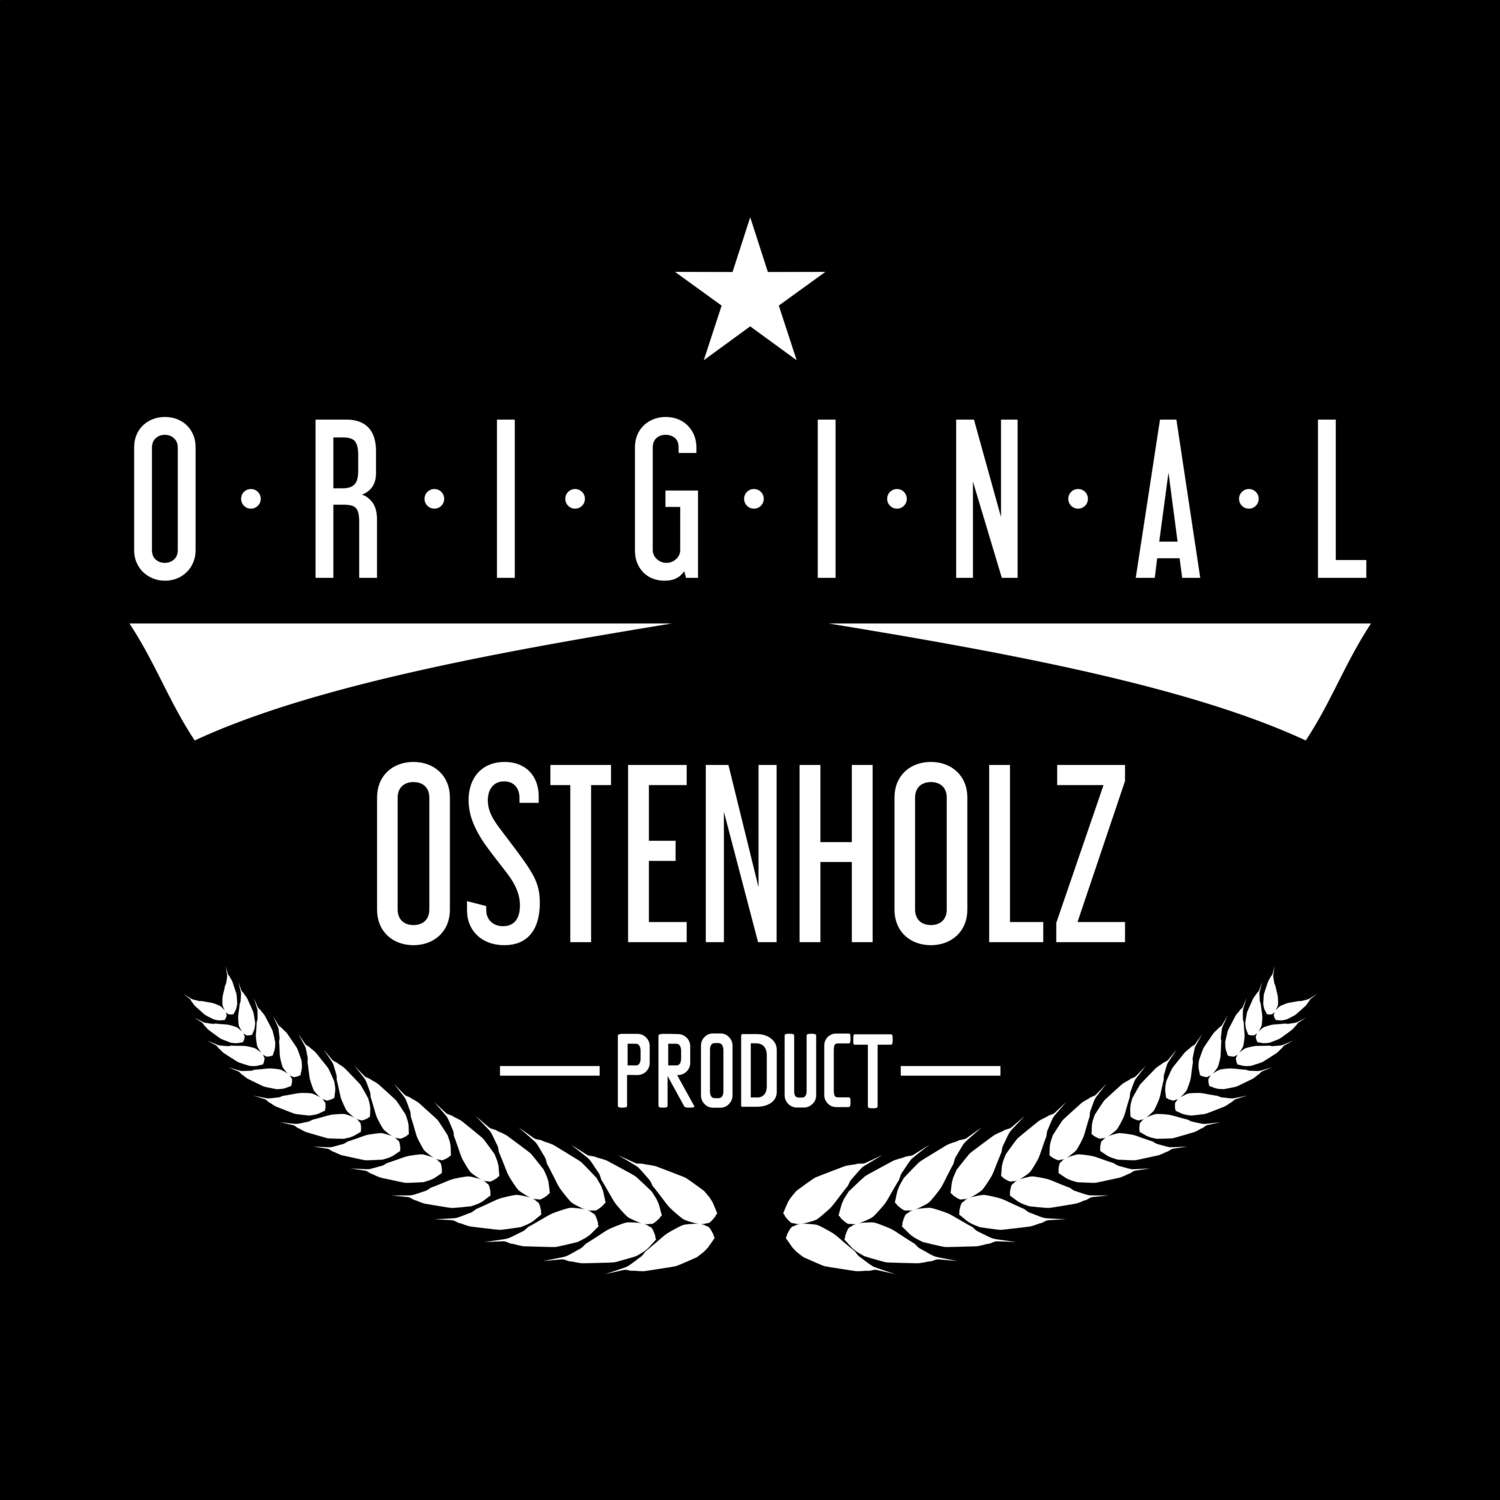 Ostenholz T-Shirt »Original Product«